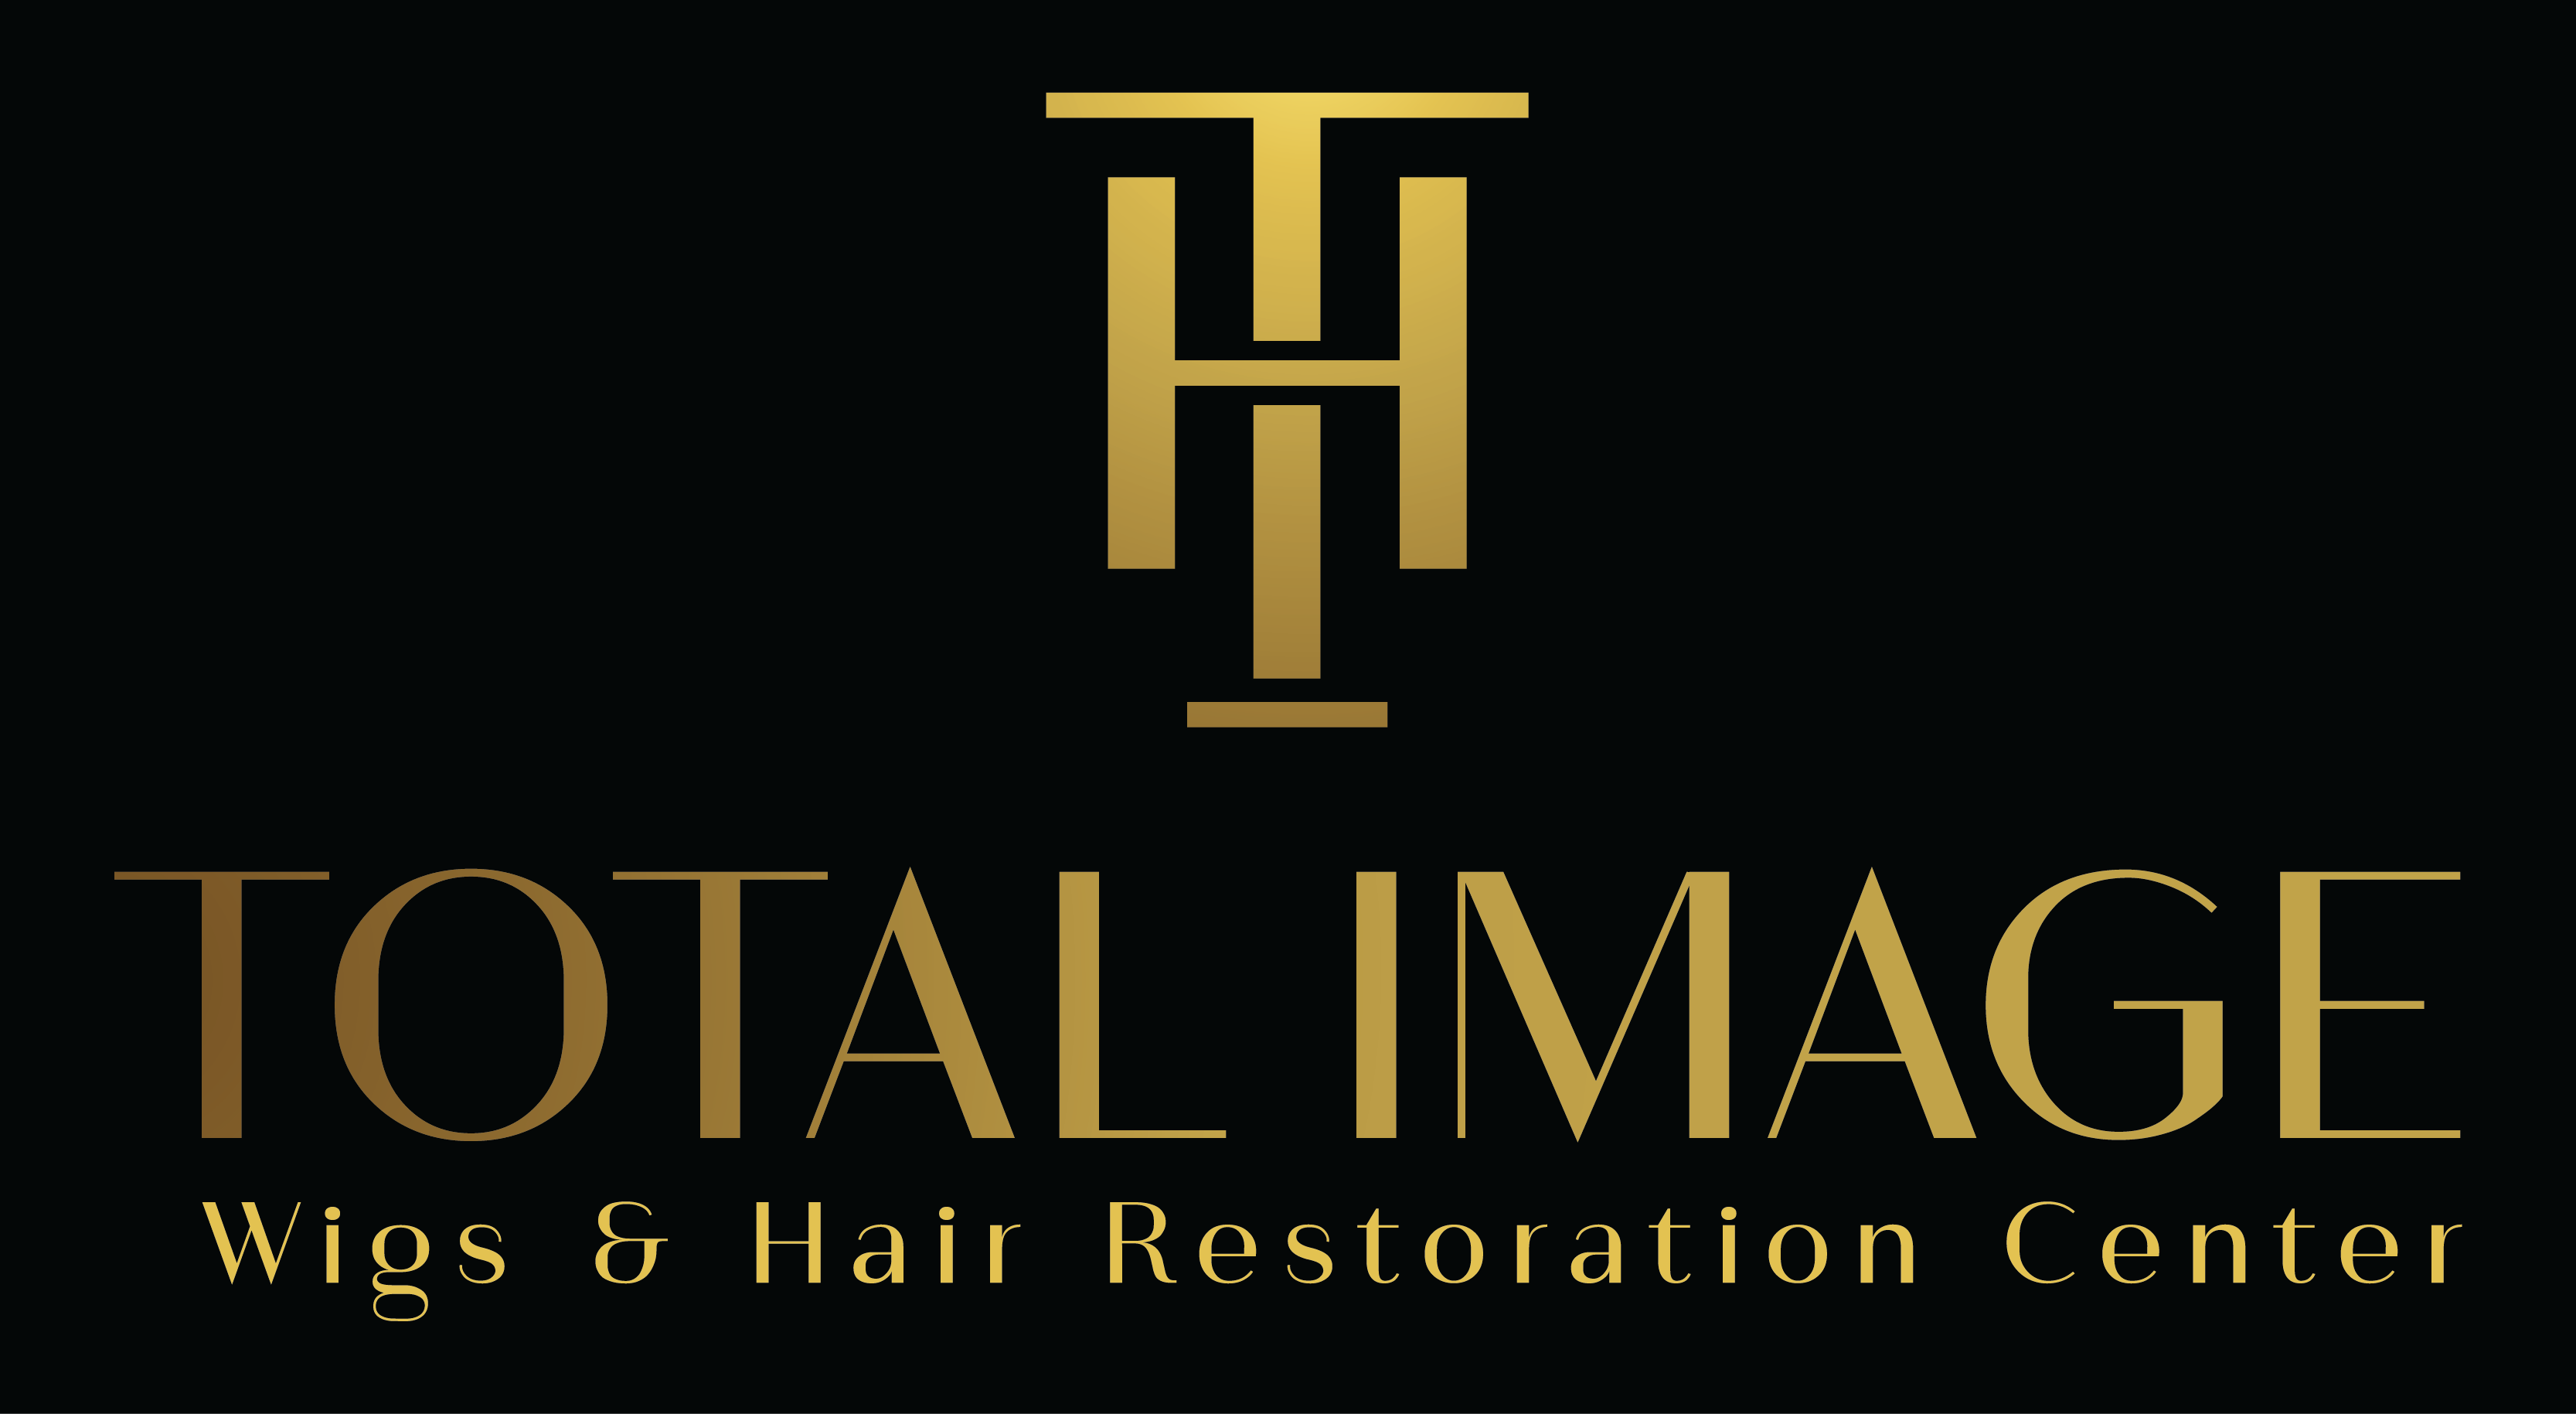 Total Image Wigs & Hair Restoration Center